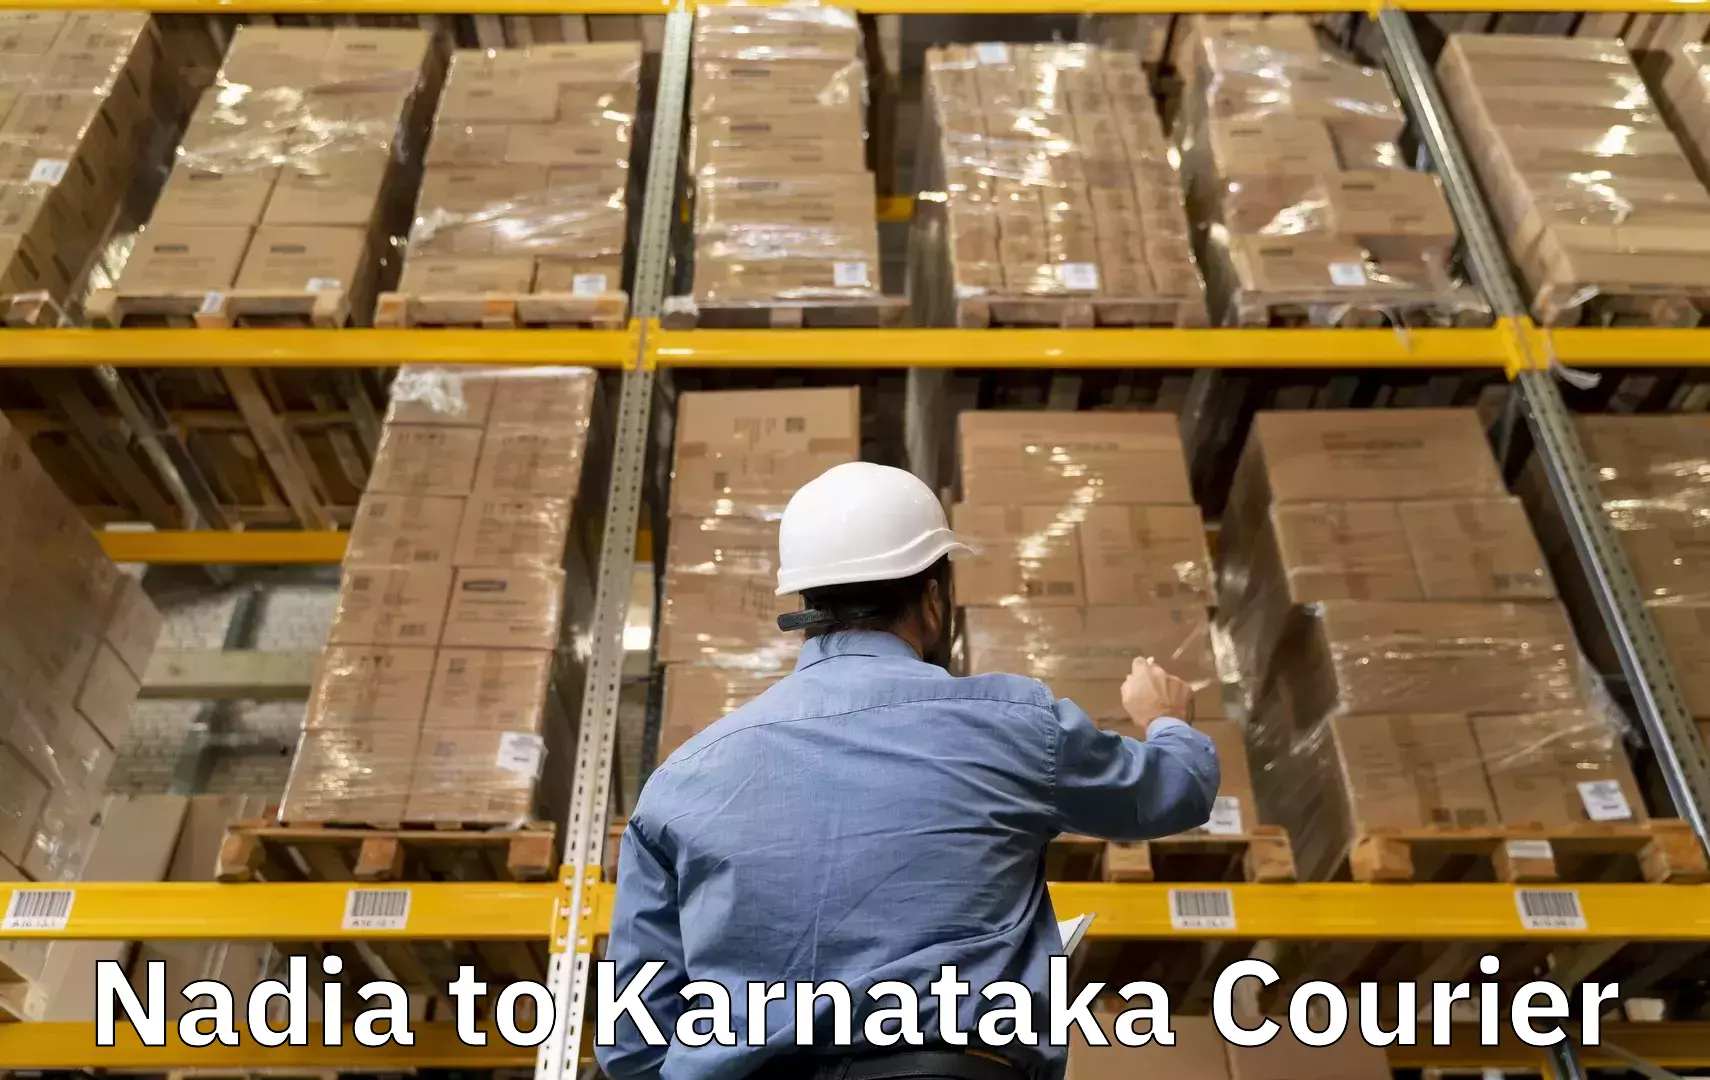 Baggage relocation service Nadia to Karnataka